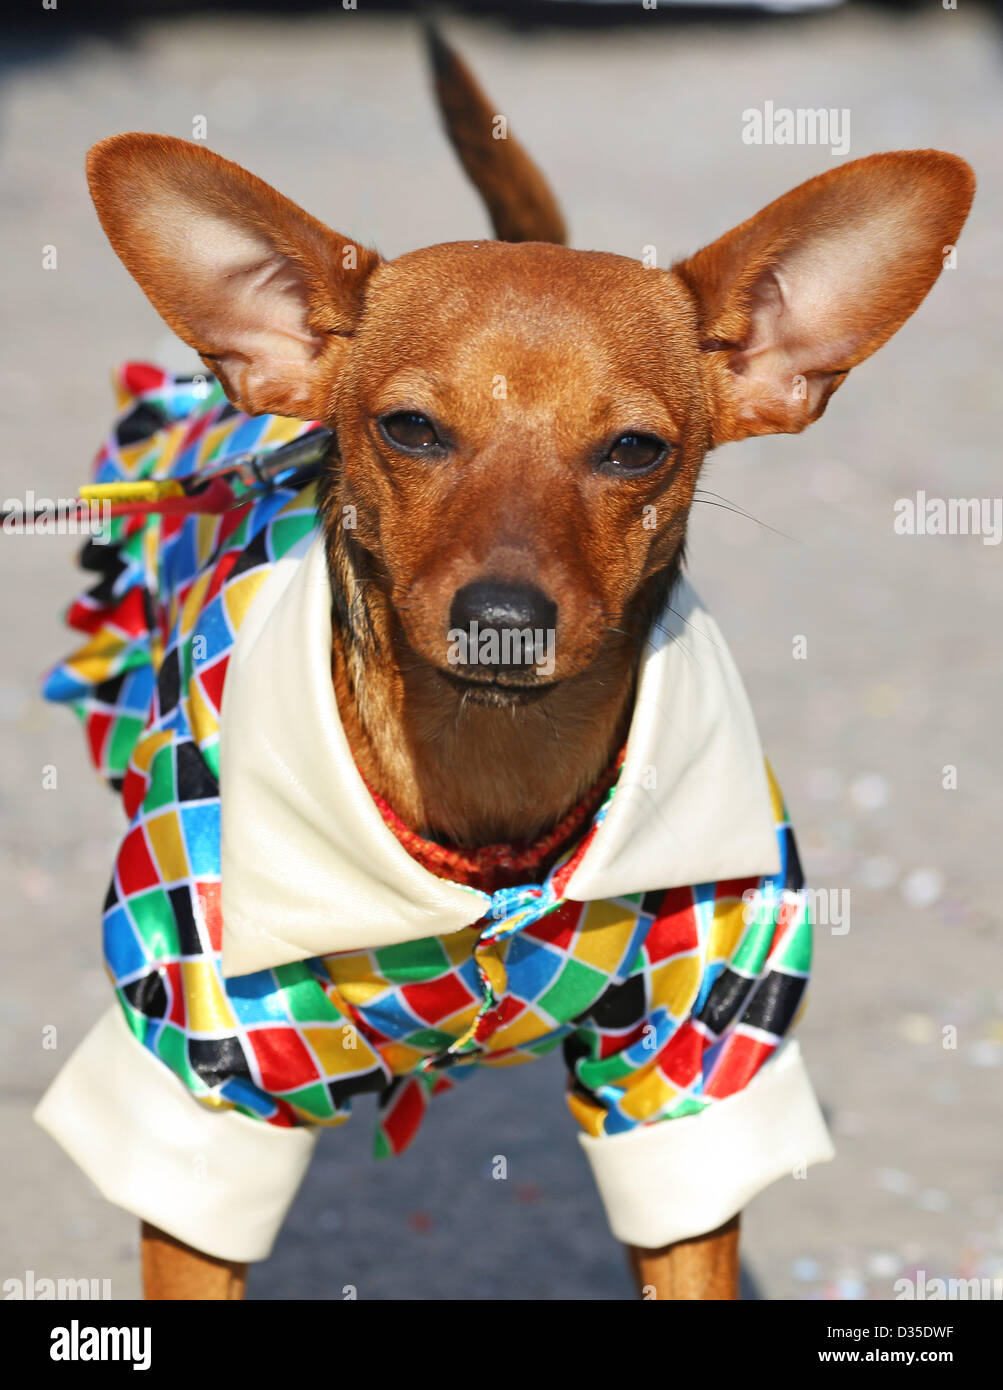 Mascota en un disfraz fotografías e imágenes de alta resolución - Alamy